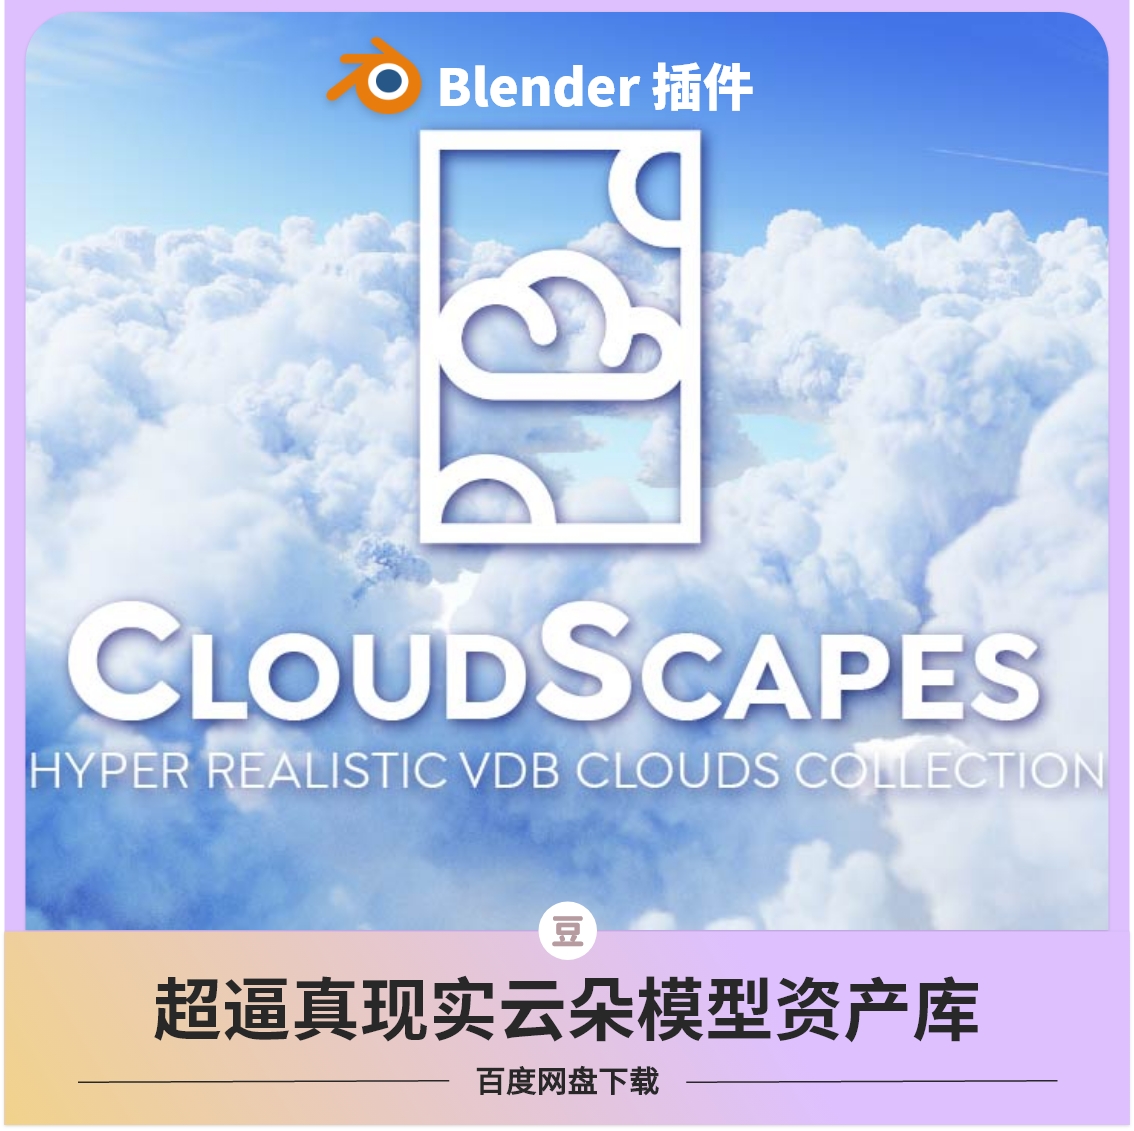 blender云朵模型真实体积云蓝天白云Cloudscape烟雾气体资产库3D 商务/设计服务 设计素材/源文件 原图主图